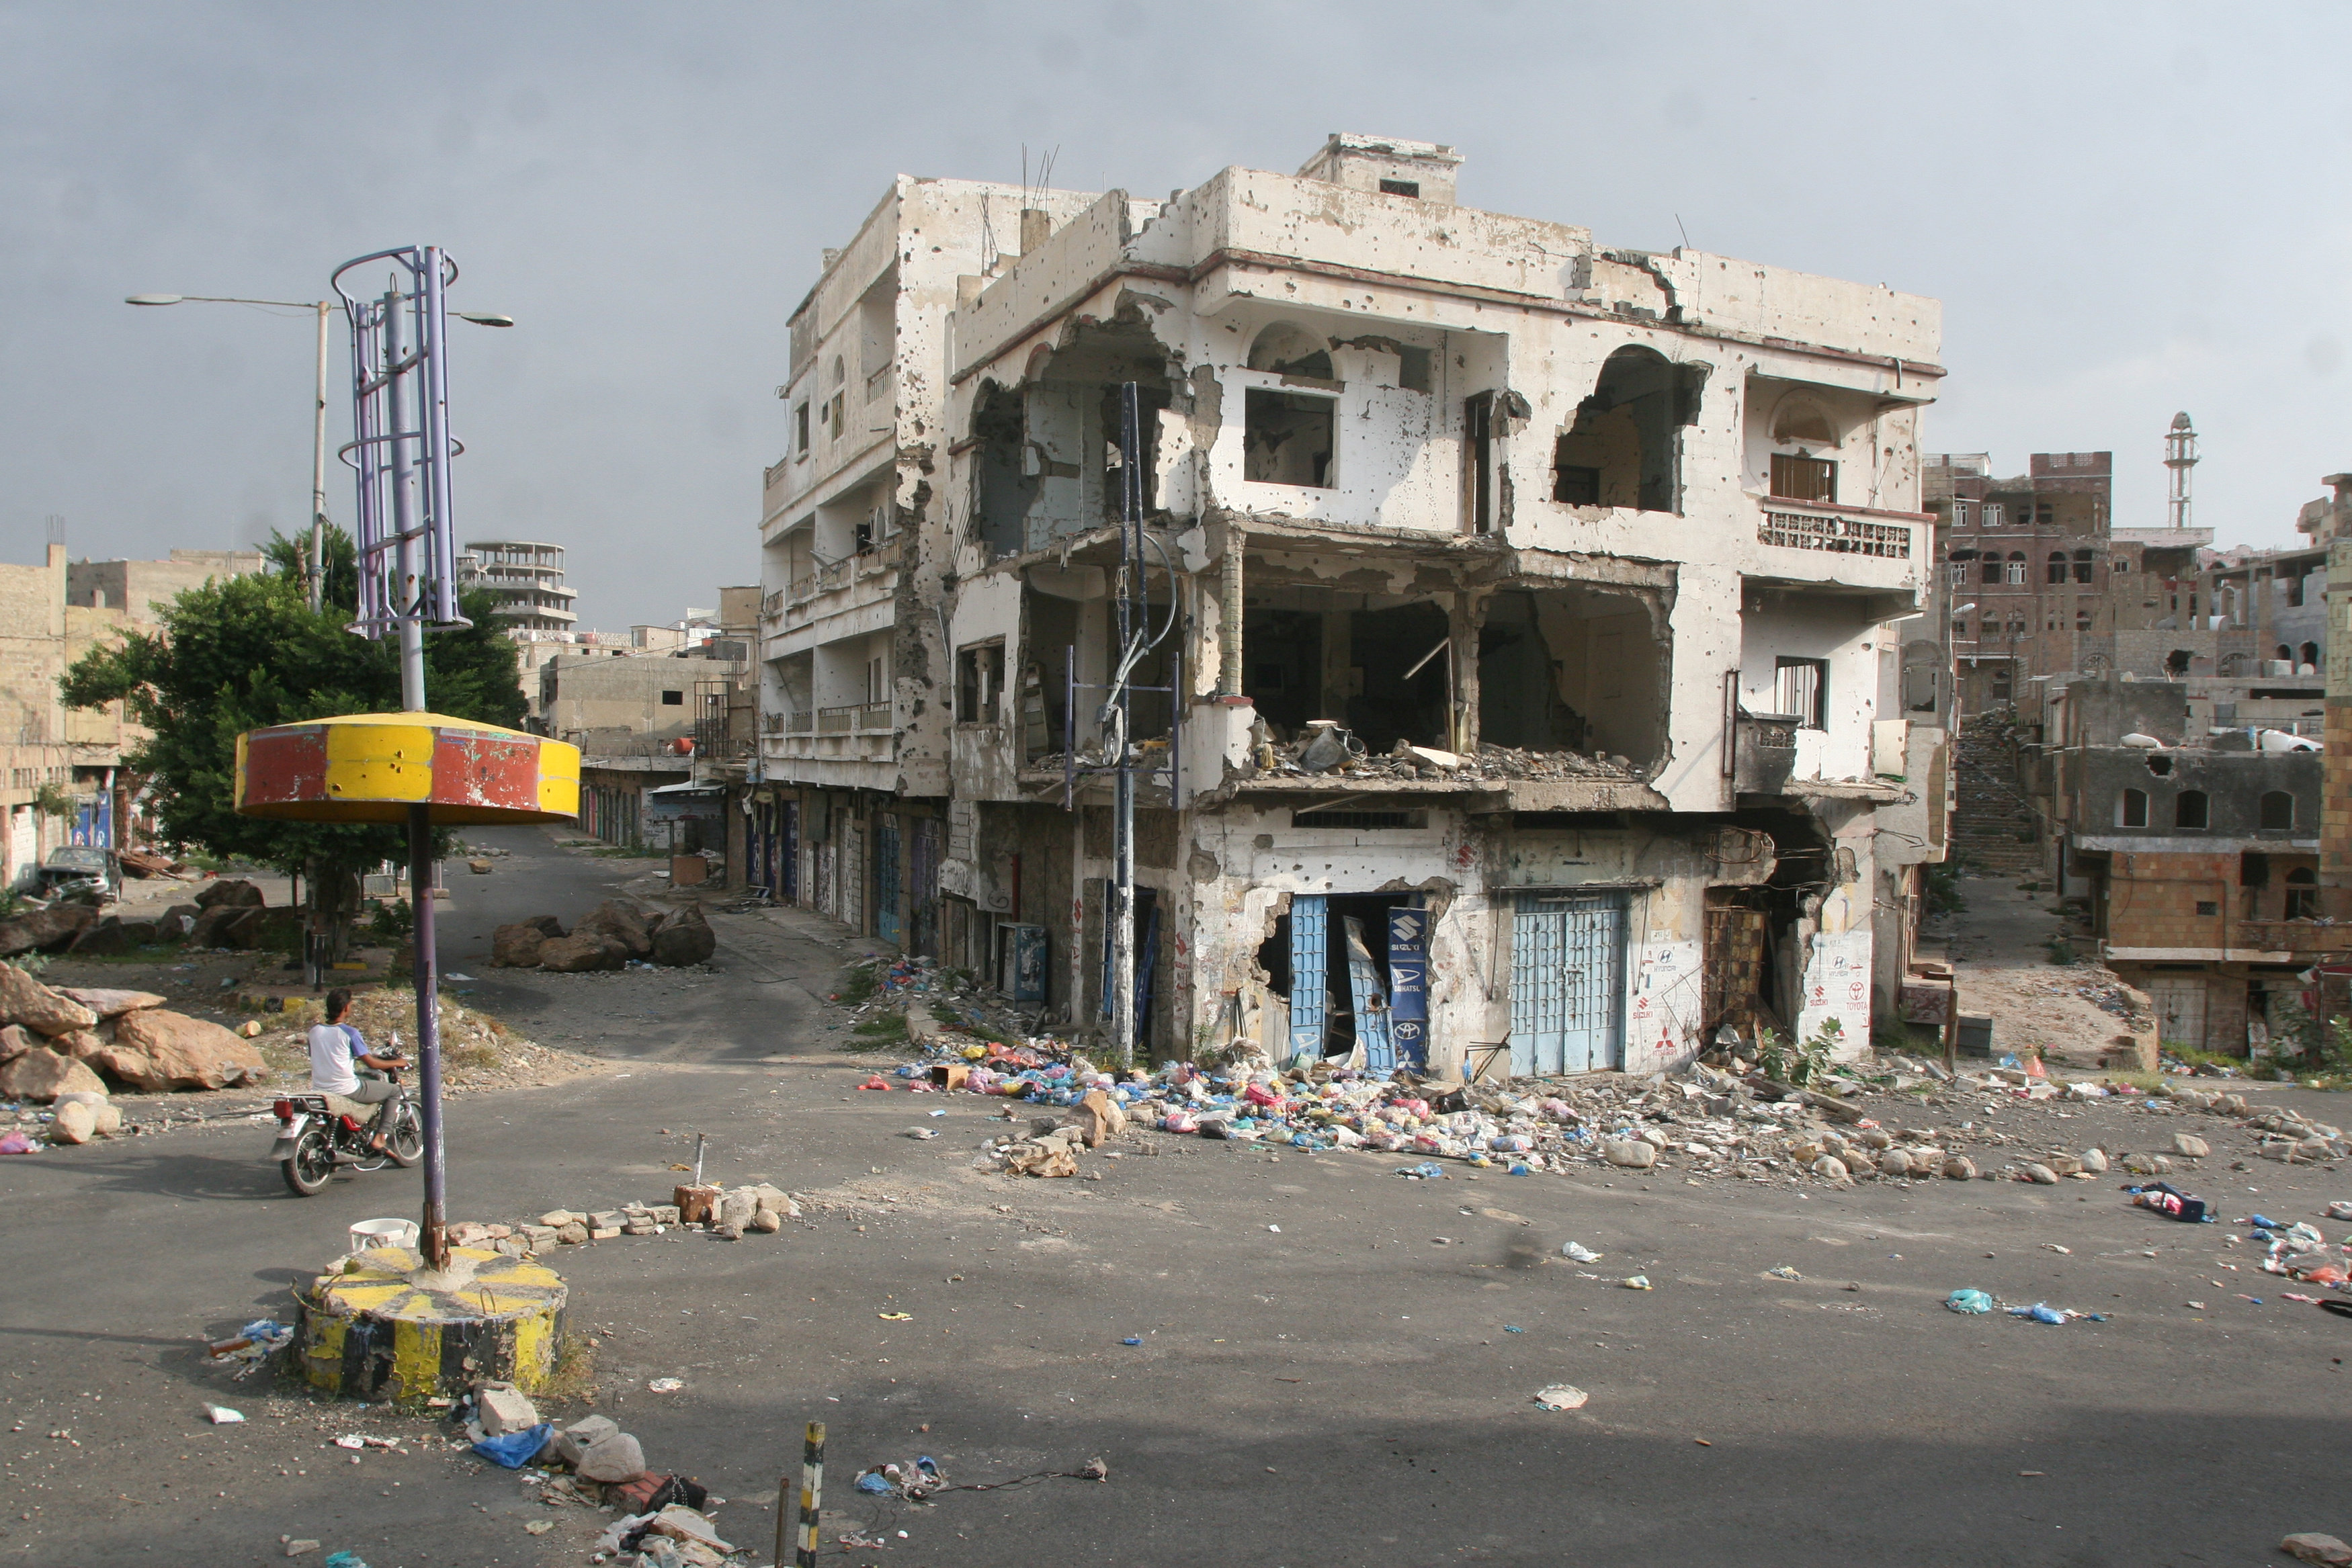 Yemen civil war costs $14 billion in damage and economic losses